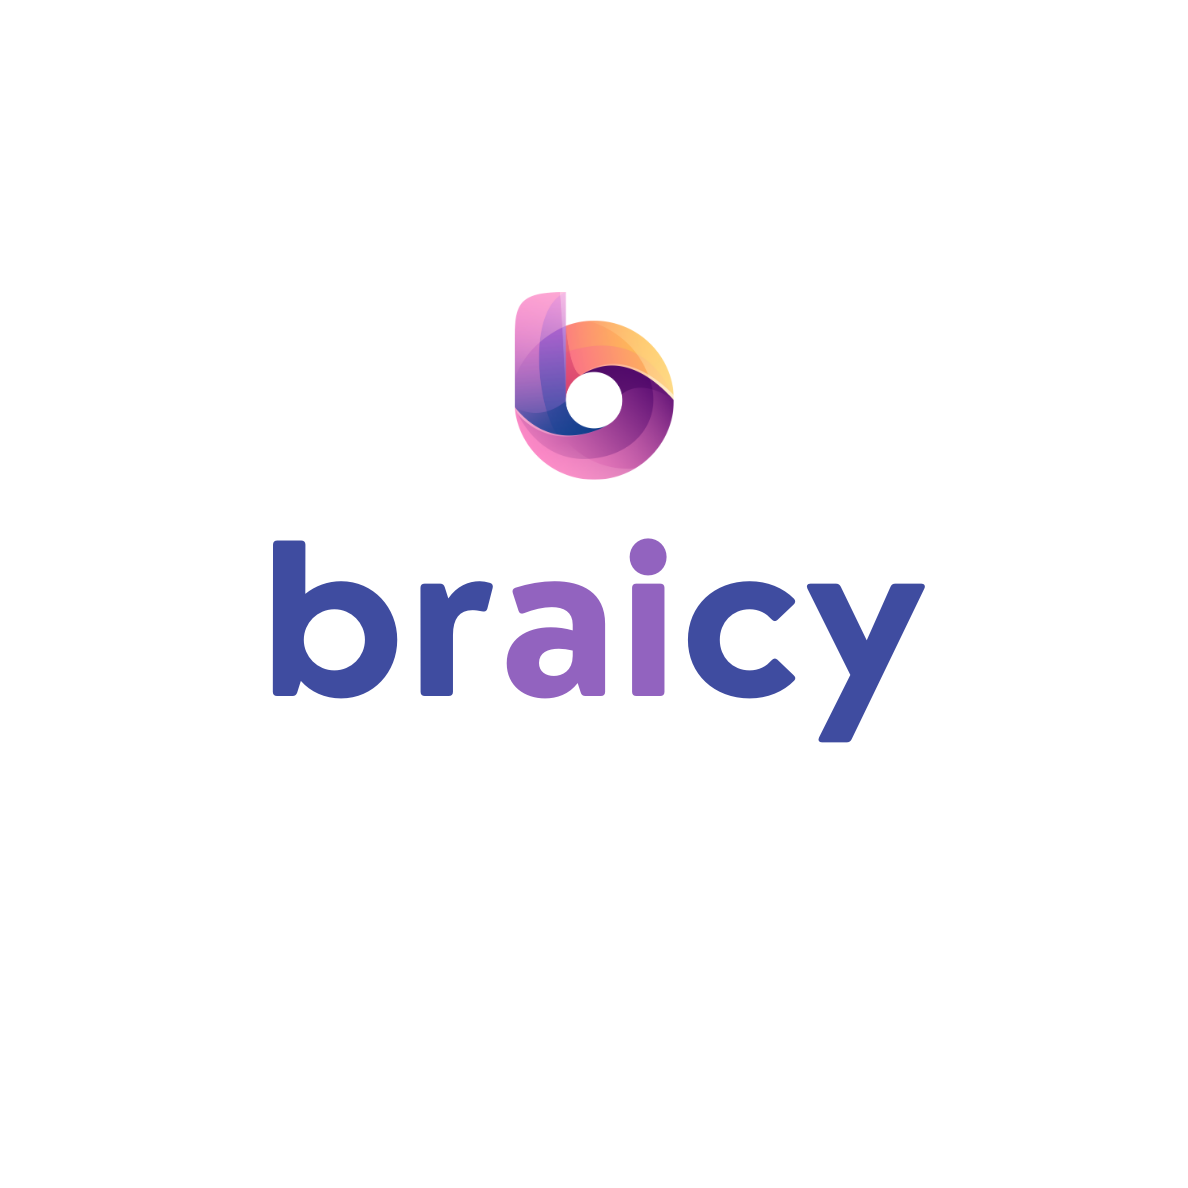 braicy.com - domain for sale